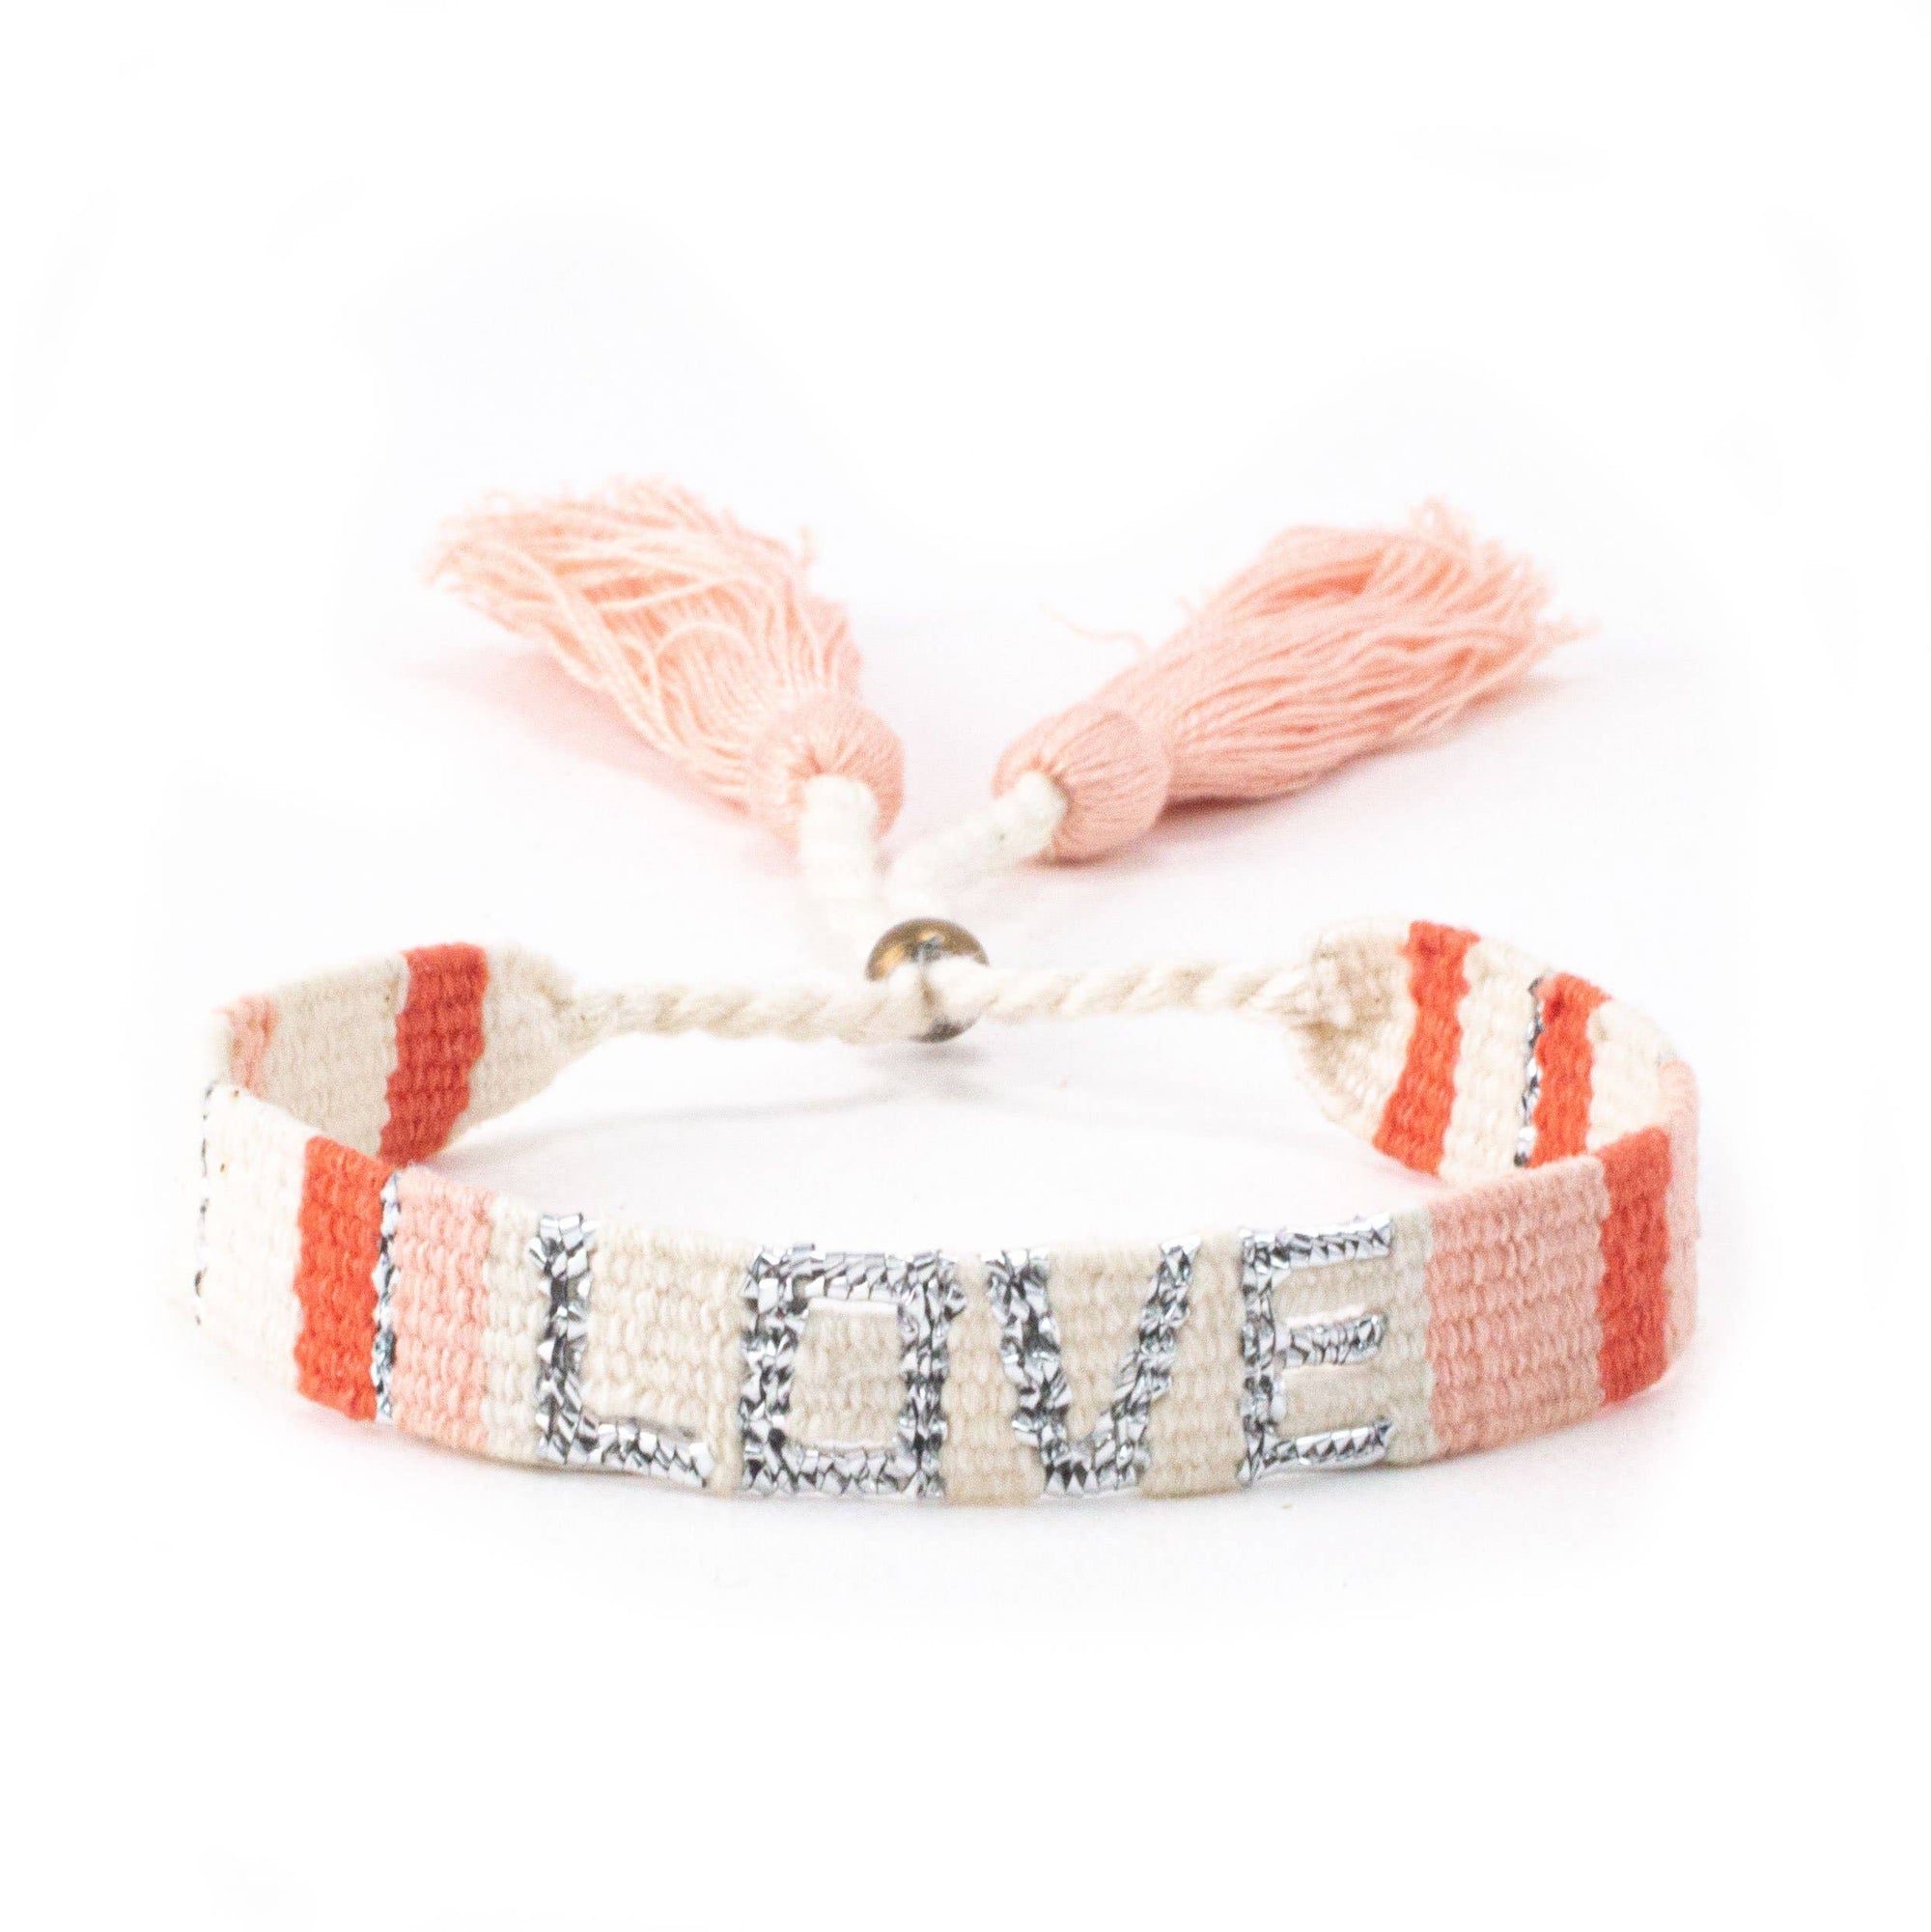 Atitlan Love Bracelet - White, Peach & Orange